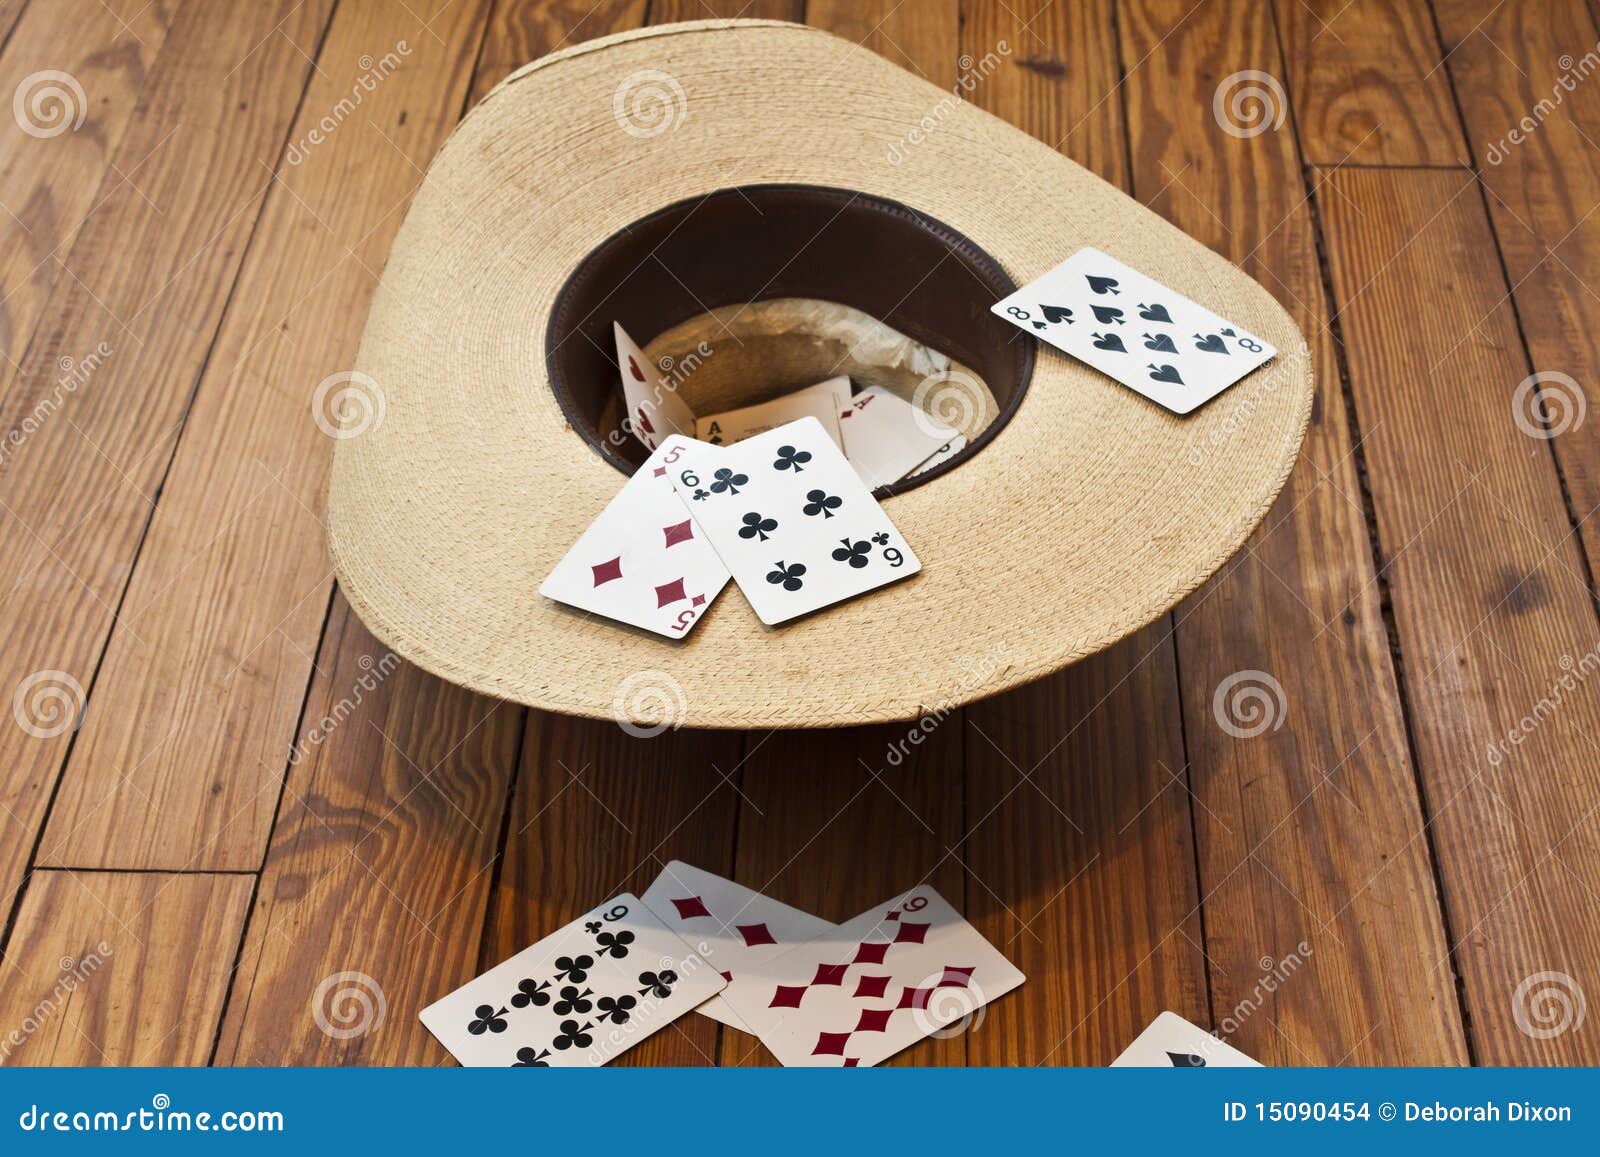 cowboy-hat-cards-15090454.jpg